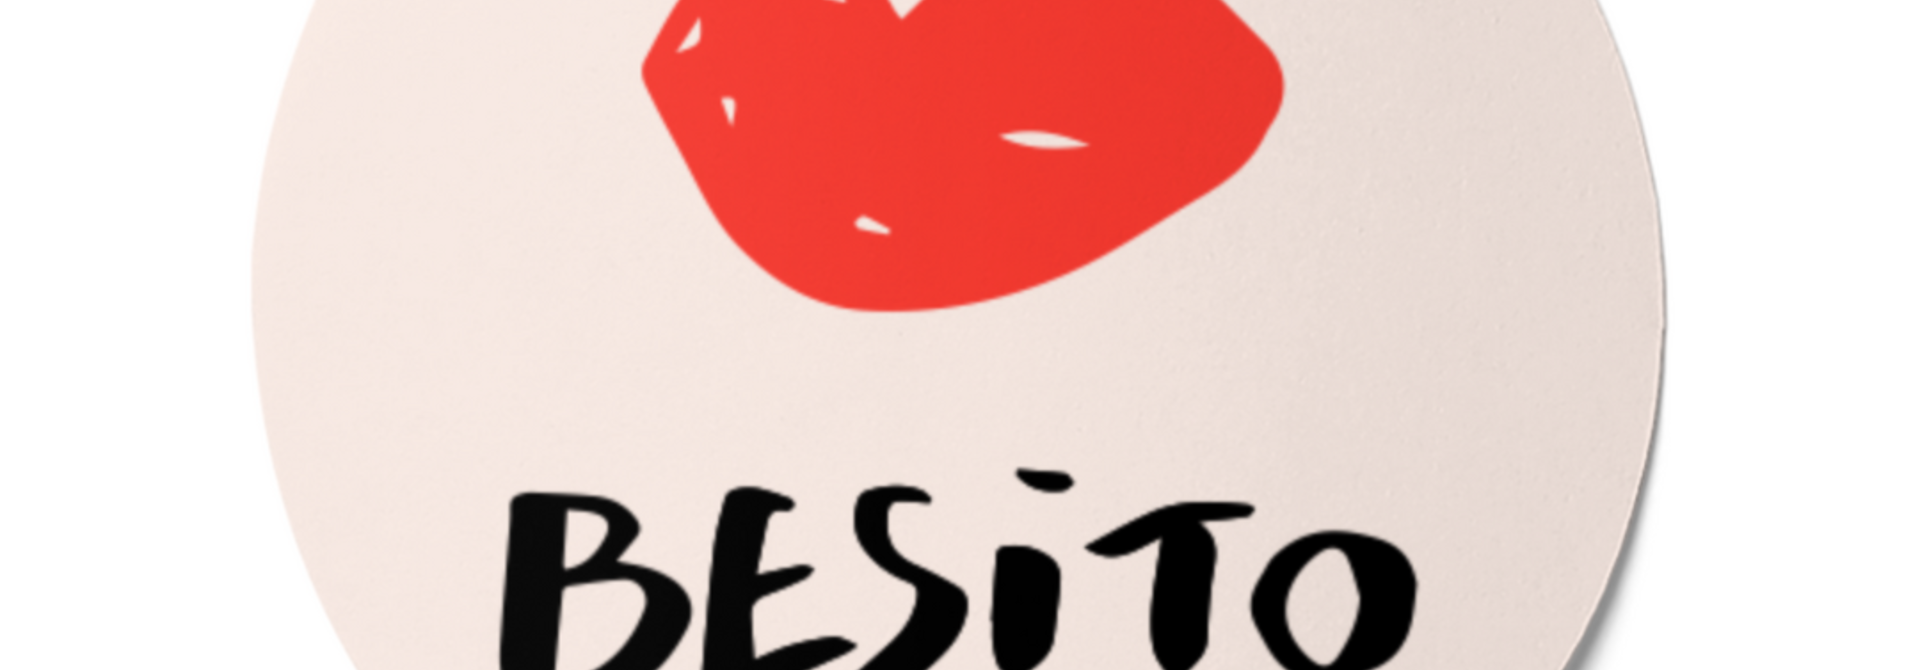 Sticker roll Besito